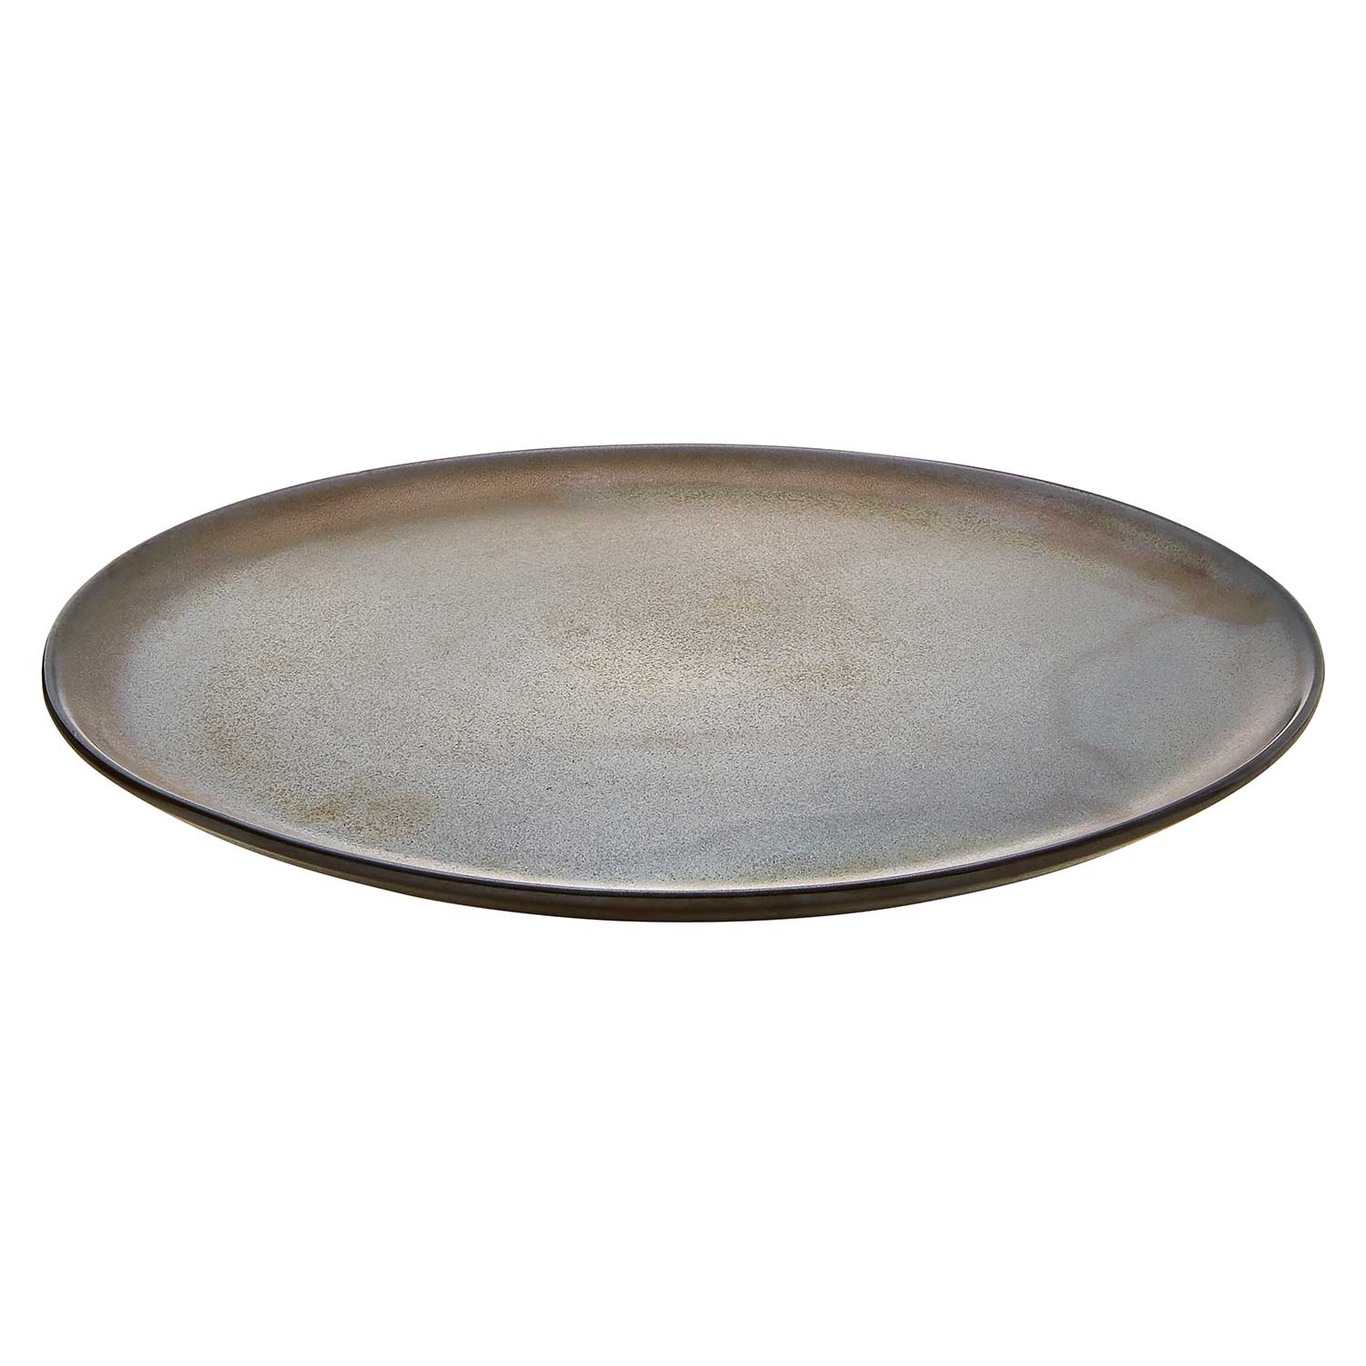 Raw Plate 28 cm, Metallic Brown